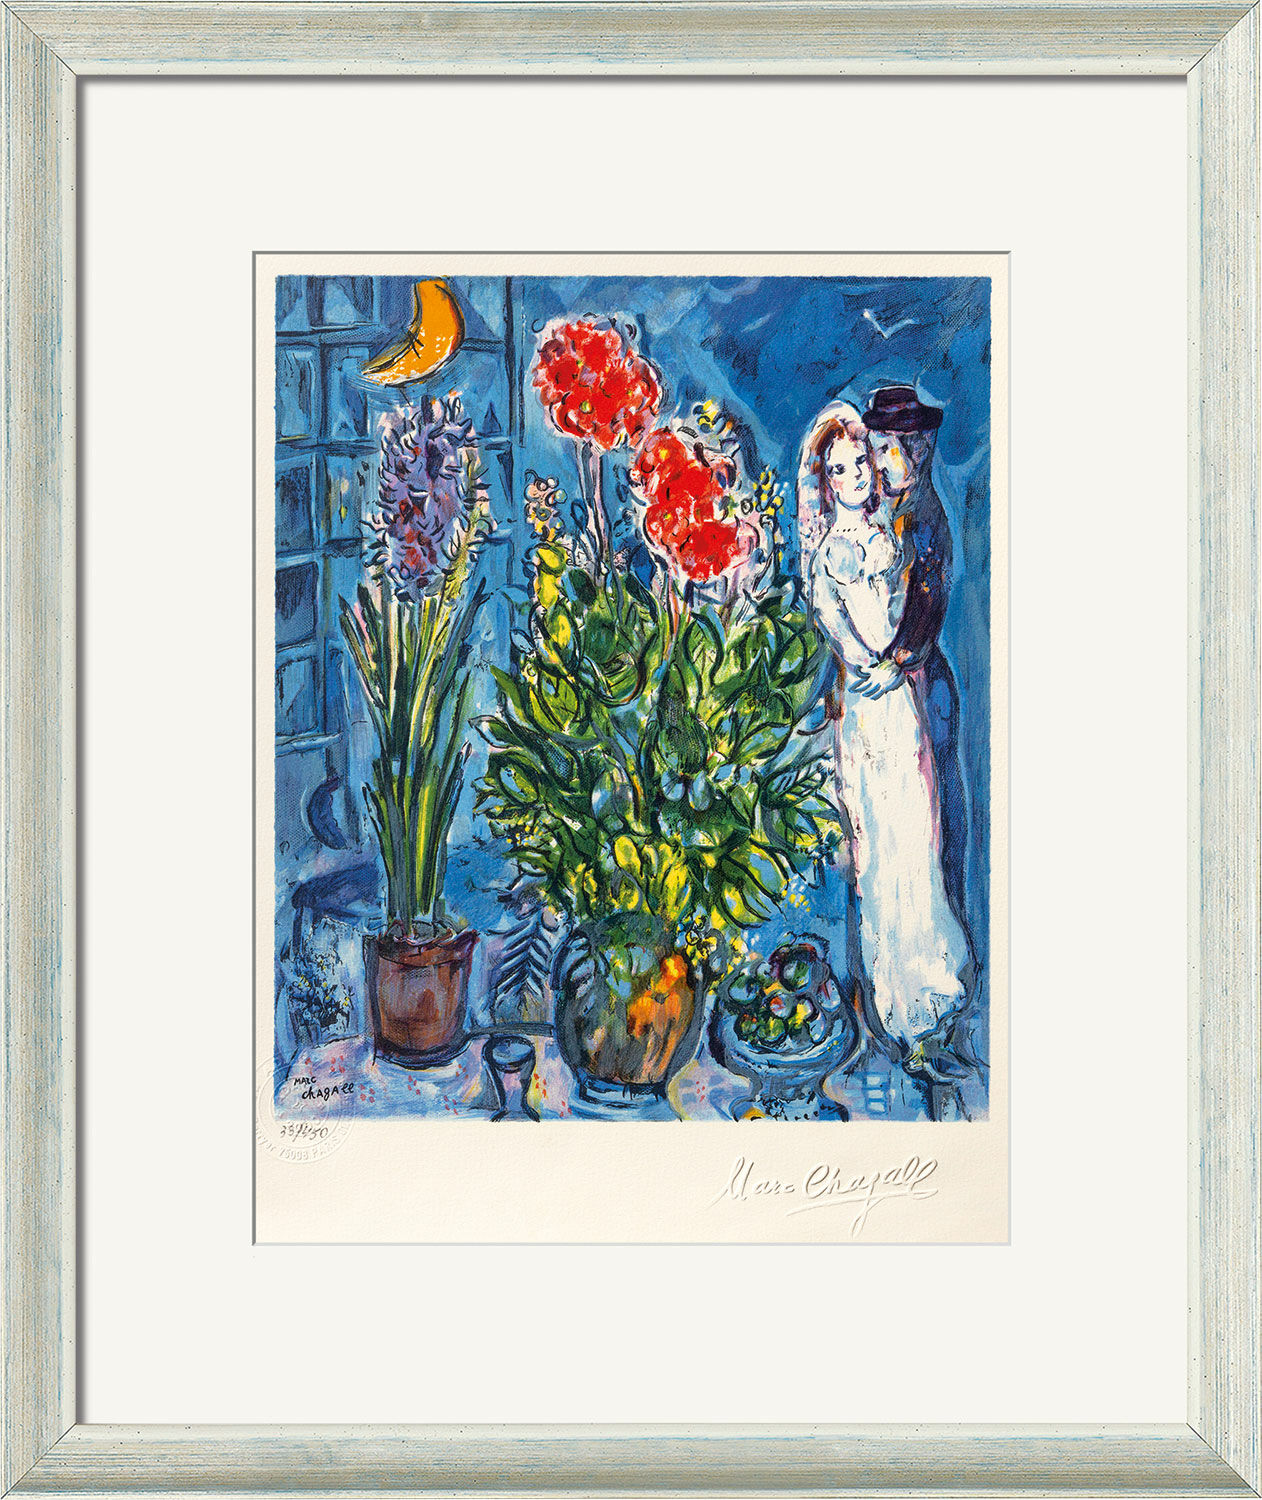 Beeld "Les Mariés", ingelijst von Marc Chagall